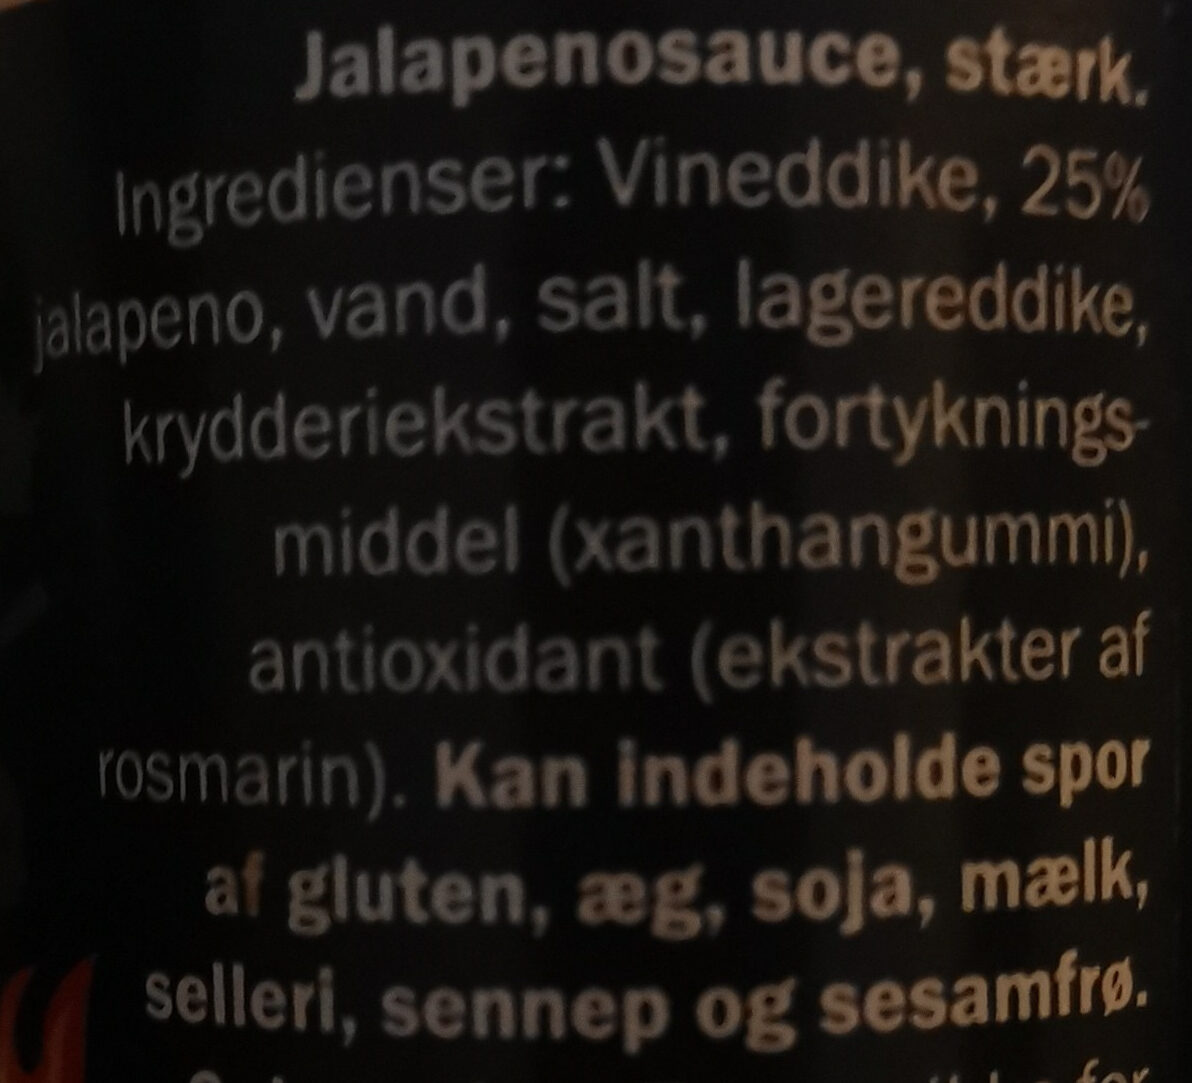 Salsa piccante con jalapenos - Ingredienser - da